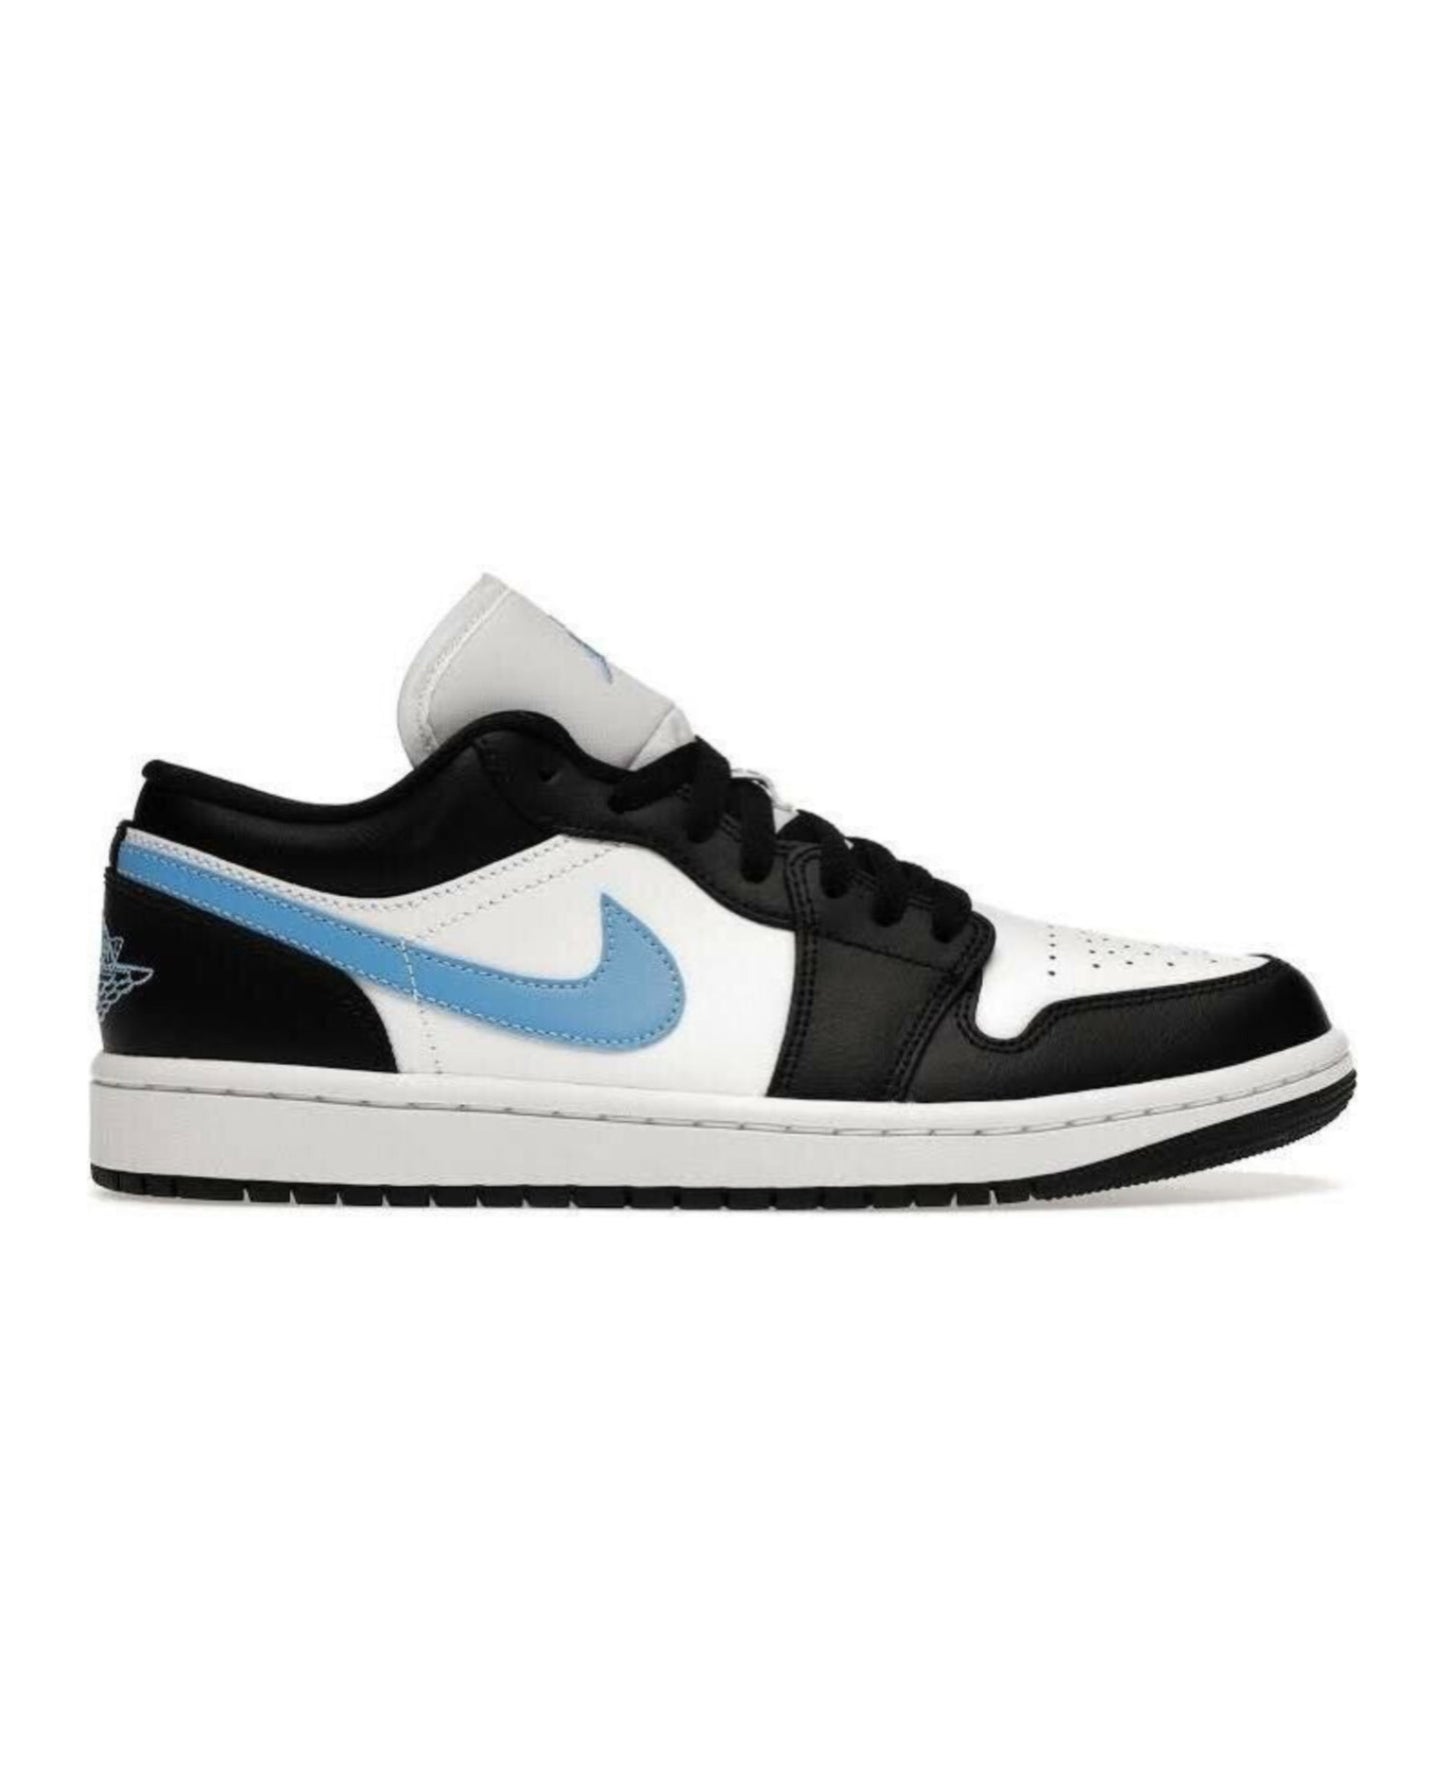 Nike Air Jordan 1 Low "Black/ University Blue"